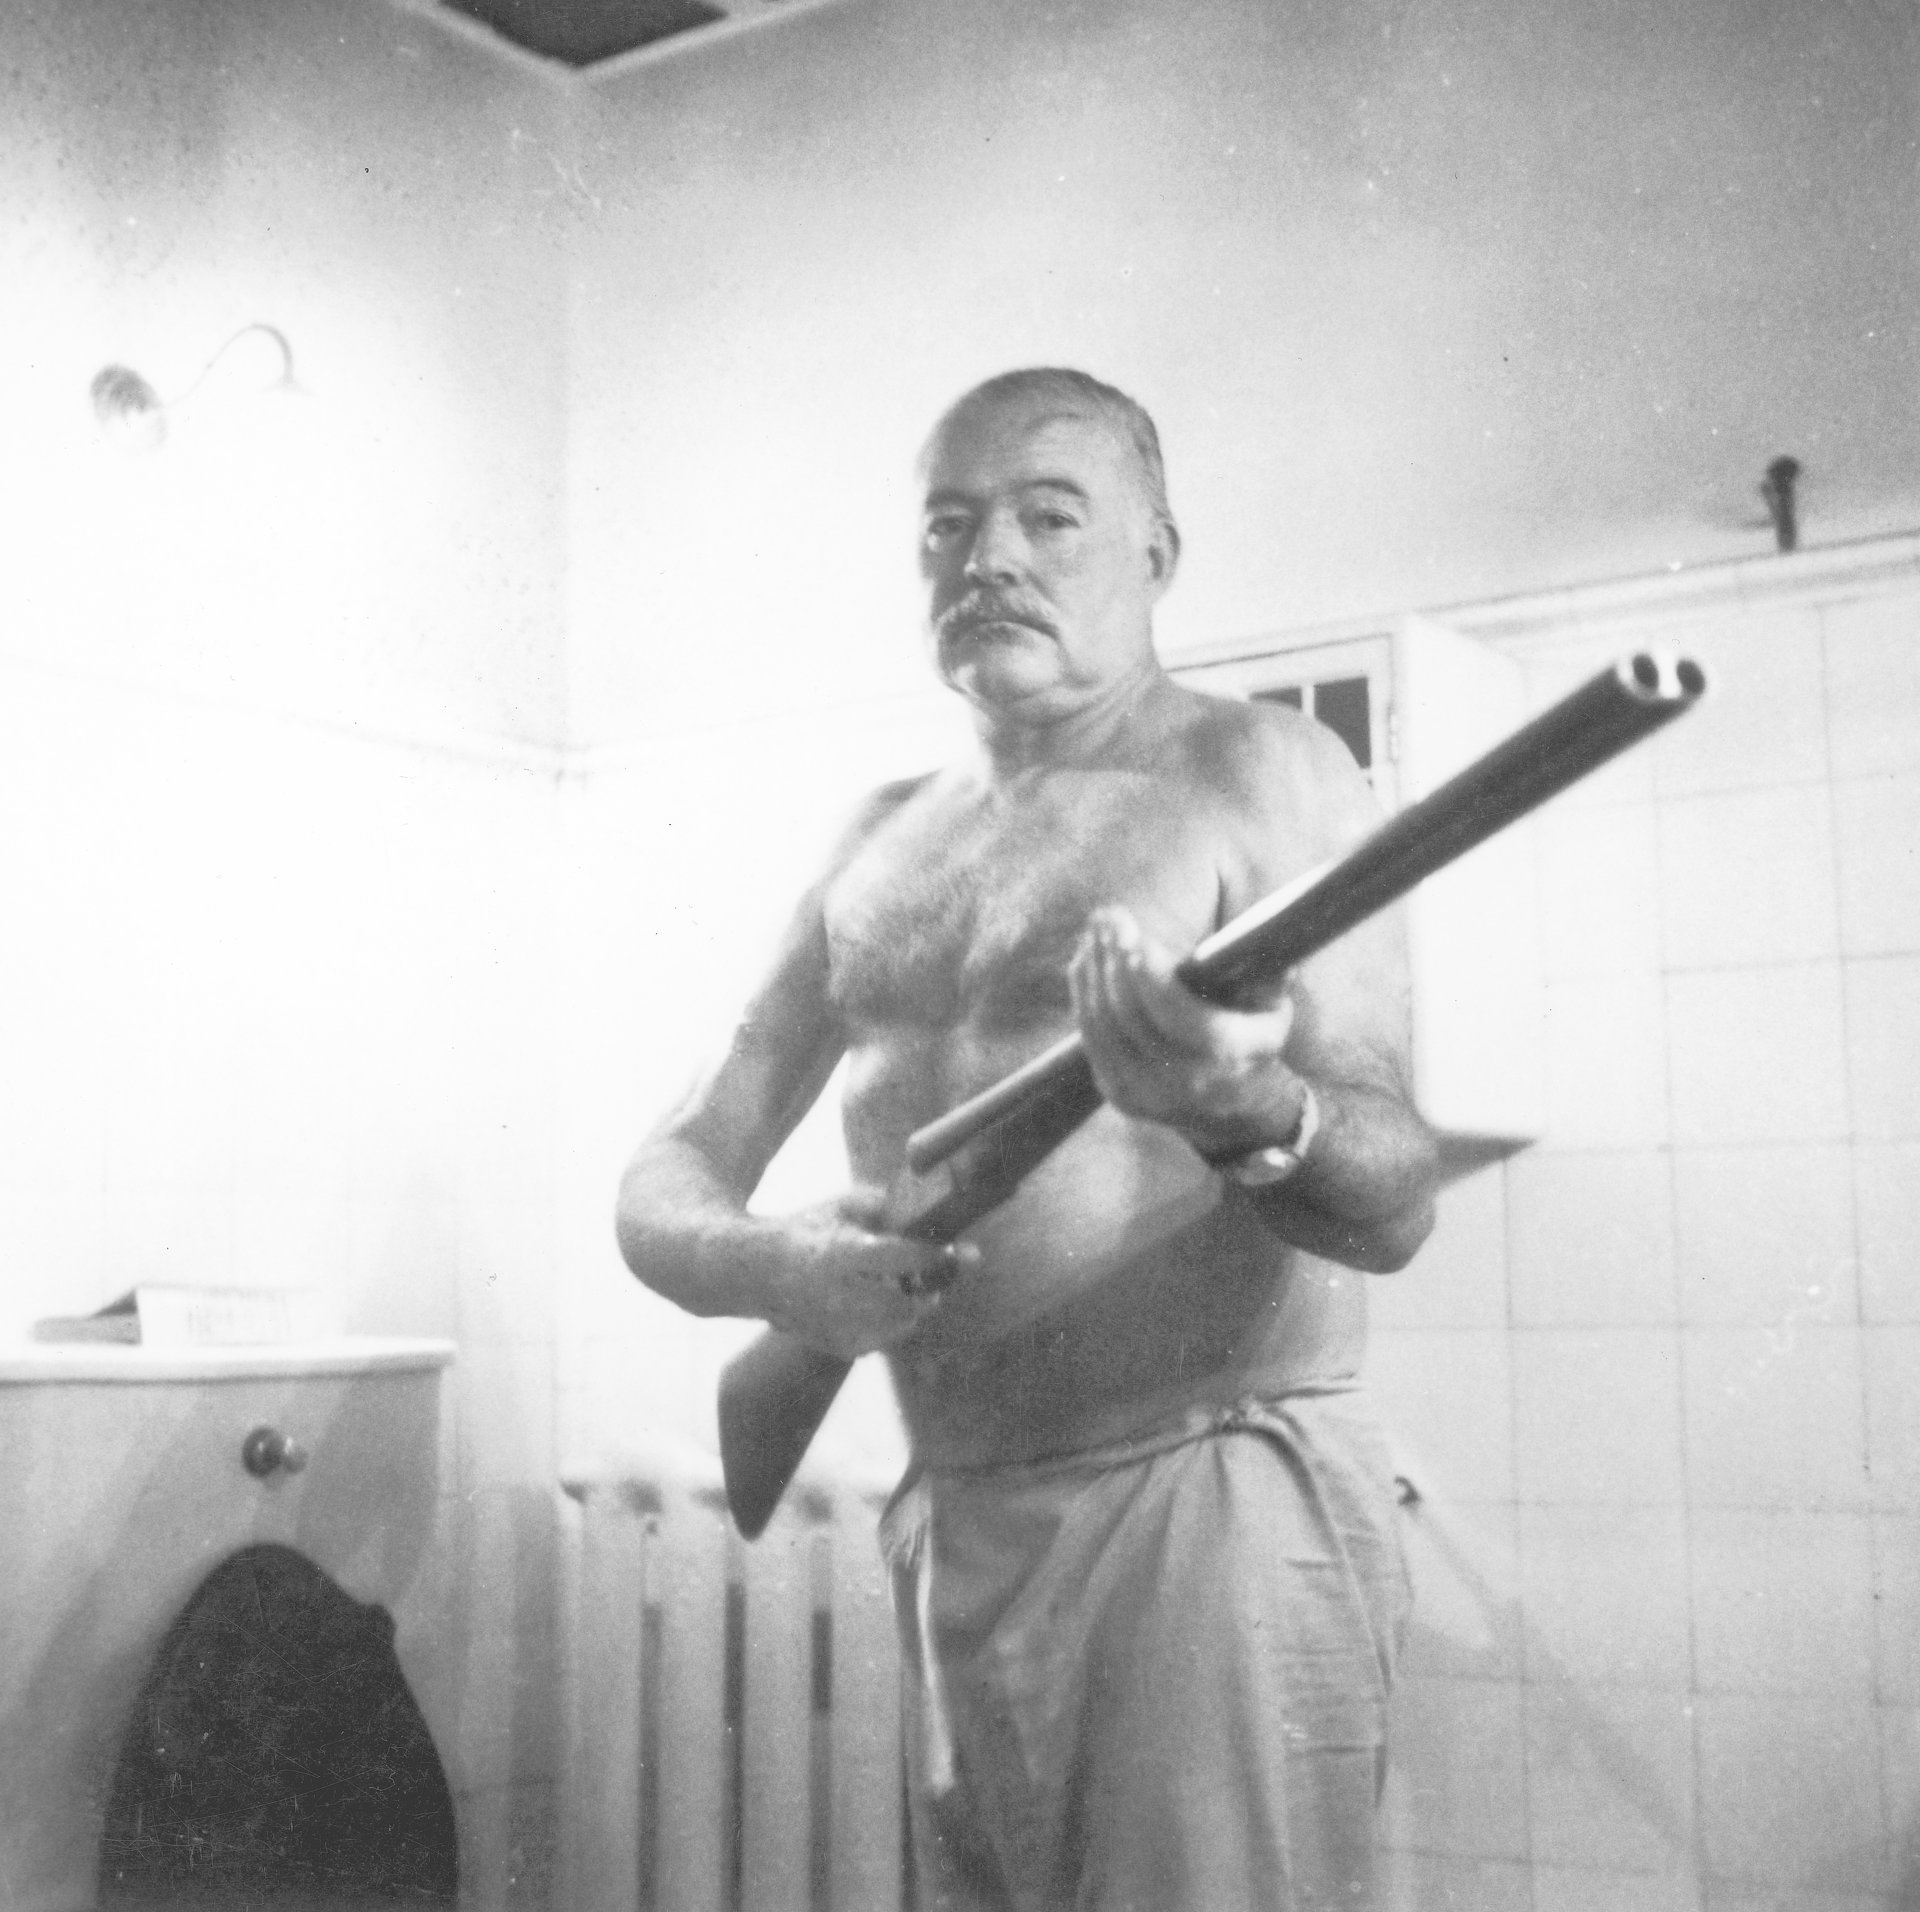 Hemingway with a gun